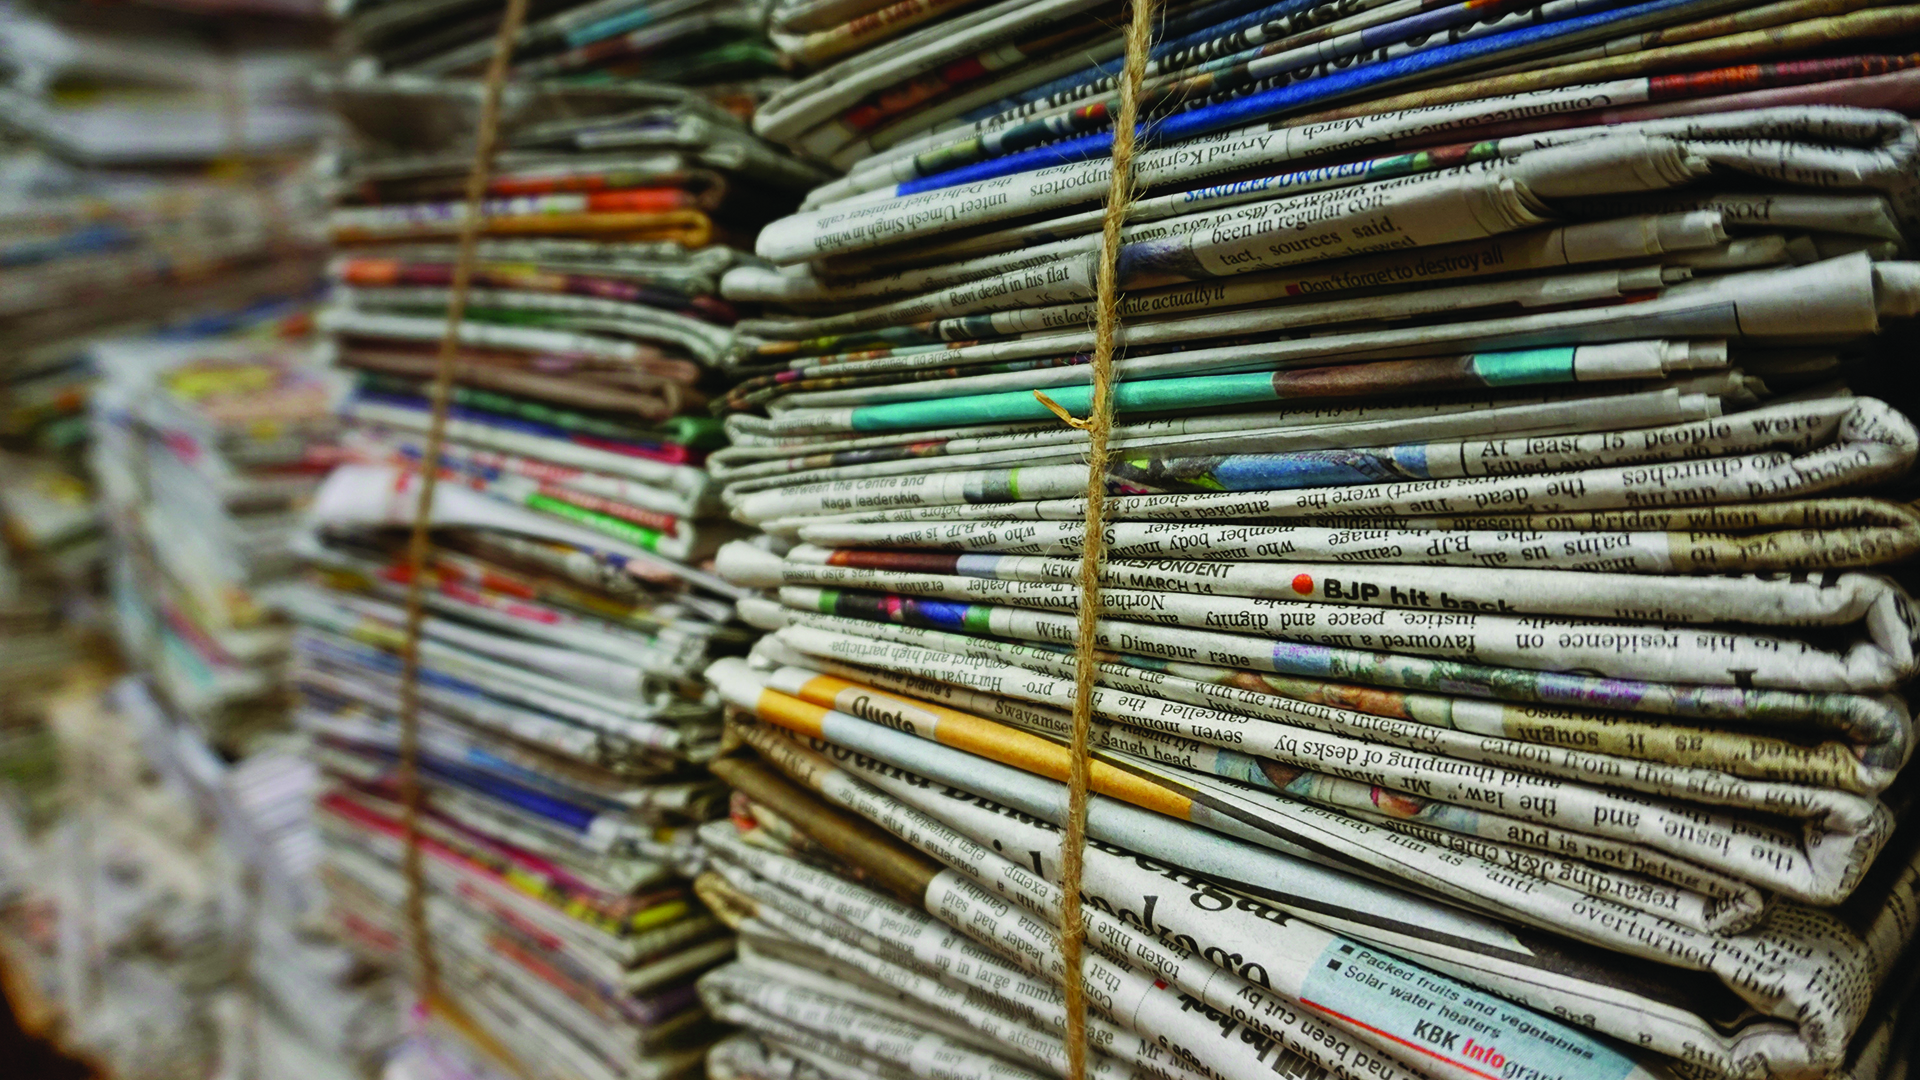 Stacks of newspapers